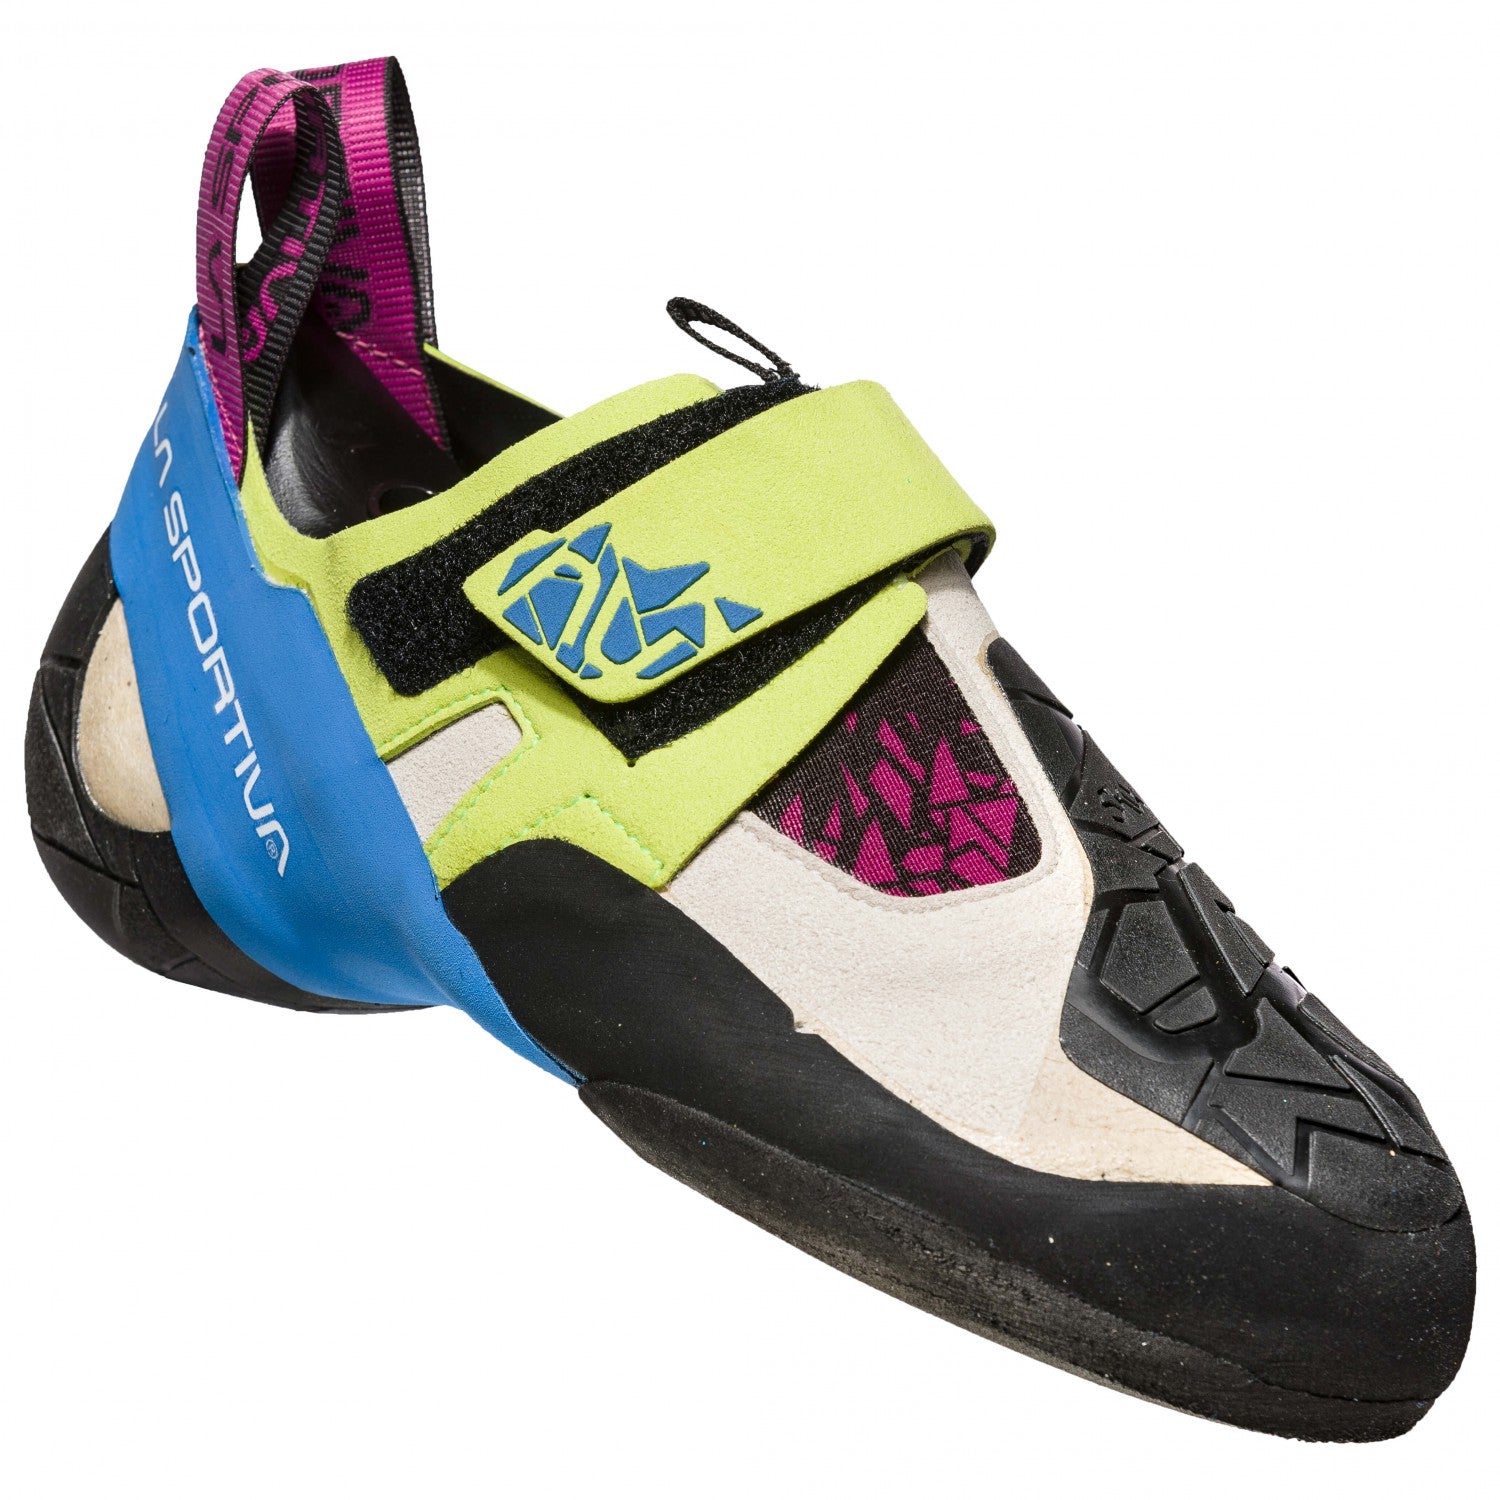 La Sportiva Skwama Women's climbing shoe, in black, blue and green colours